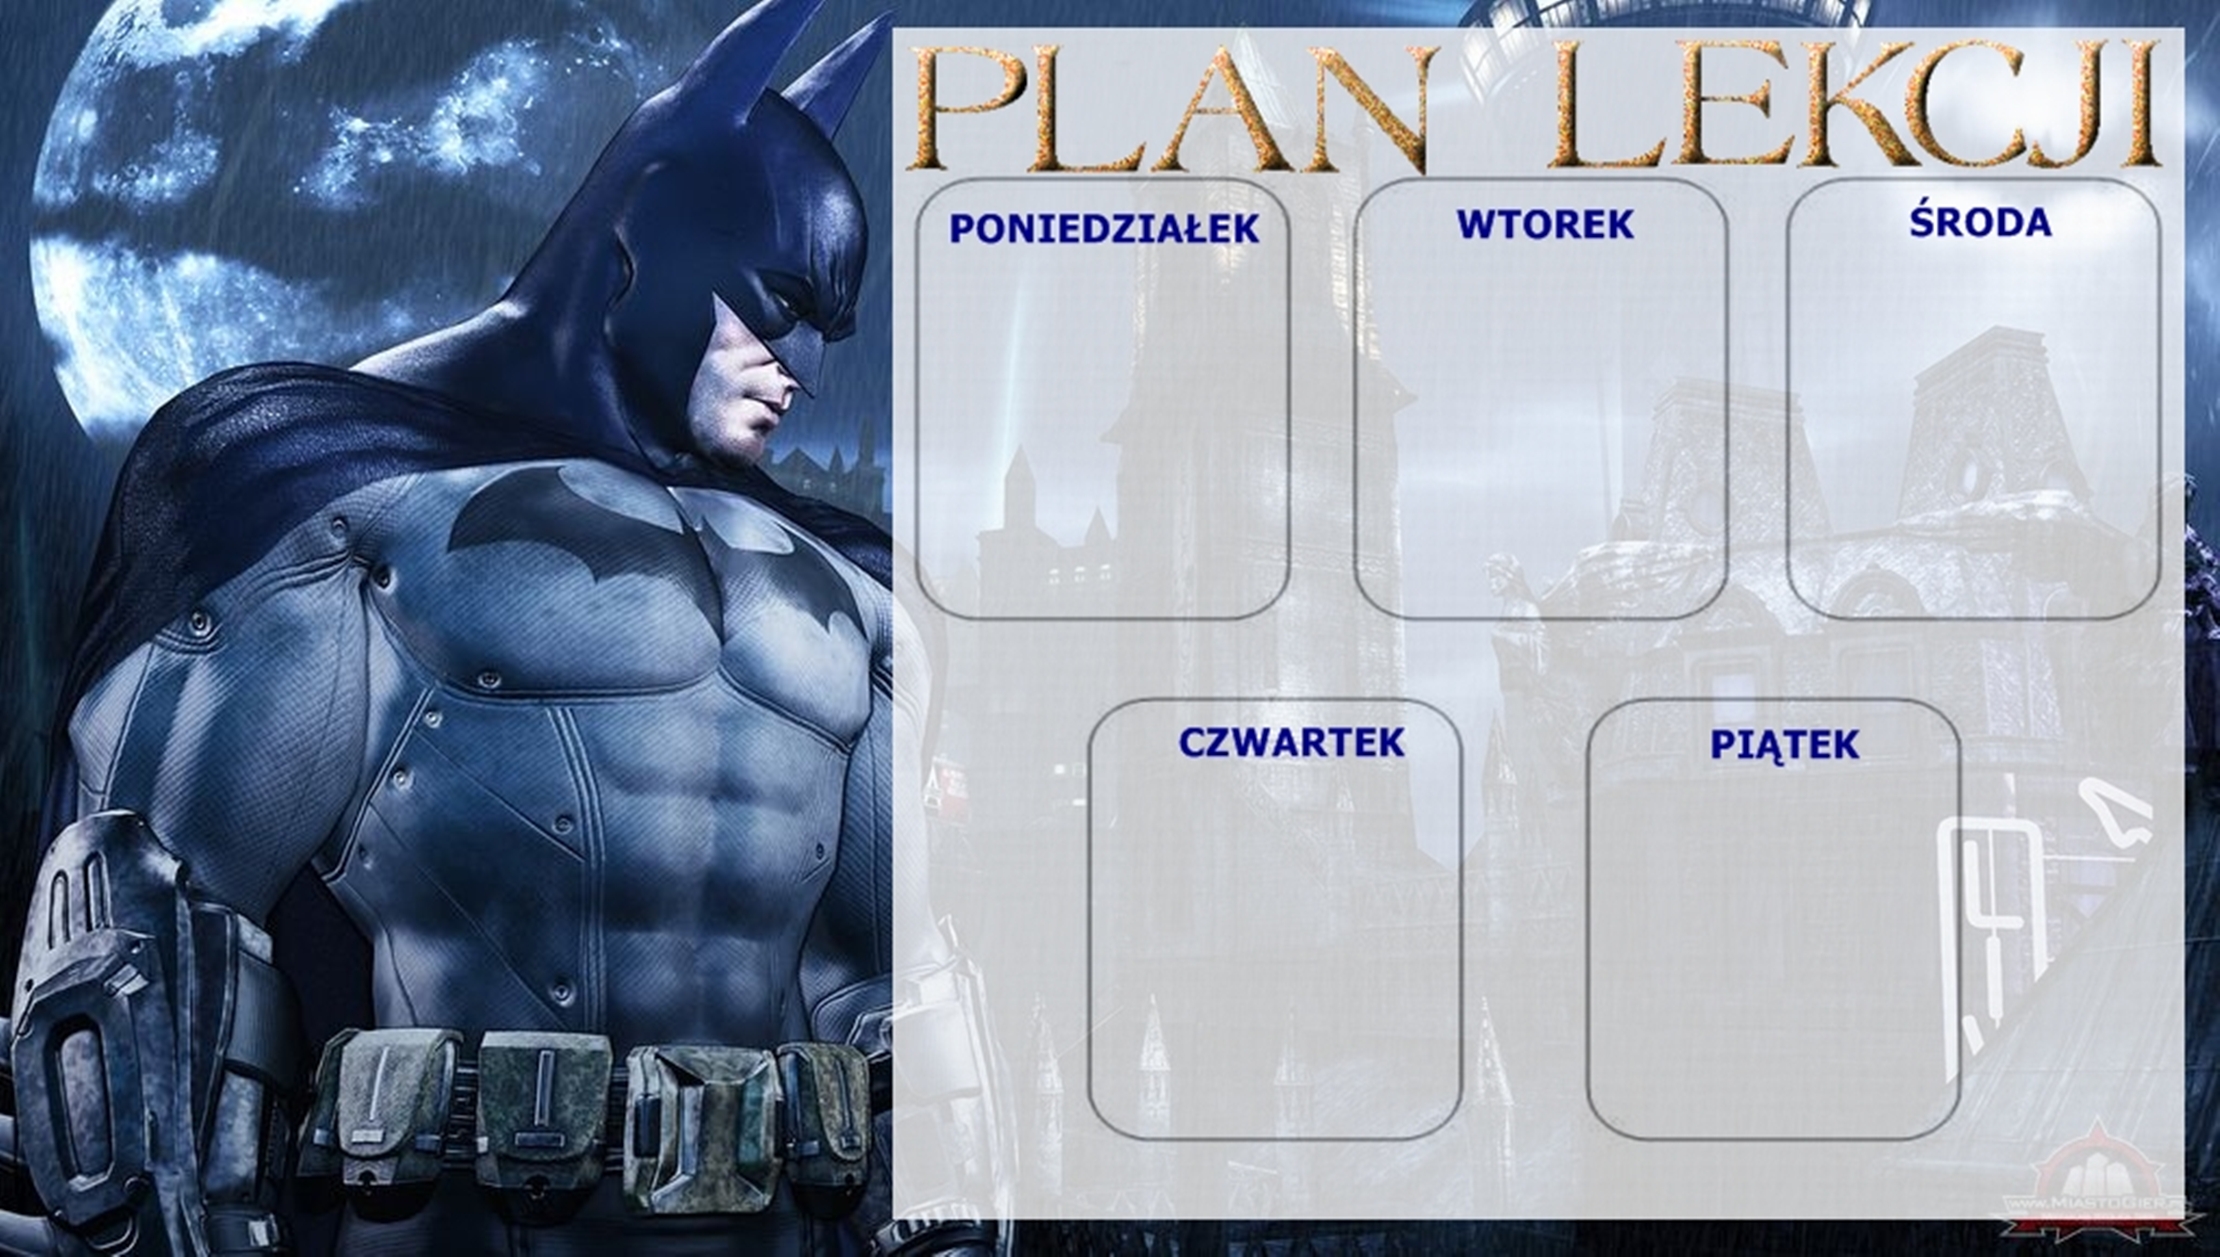 PLANY LEKCJI - Batman PLAN LEKCJI chomik alaola.jpg